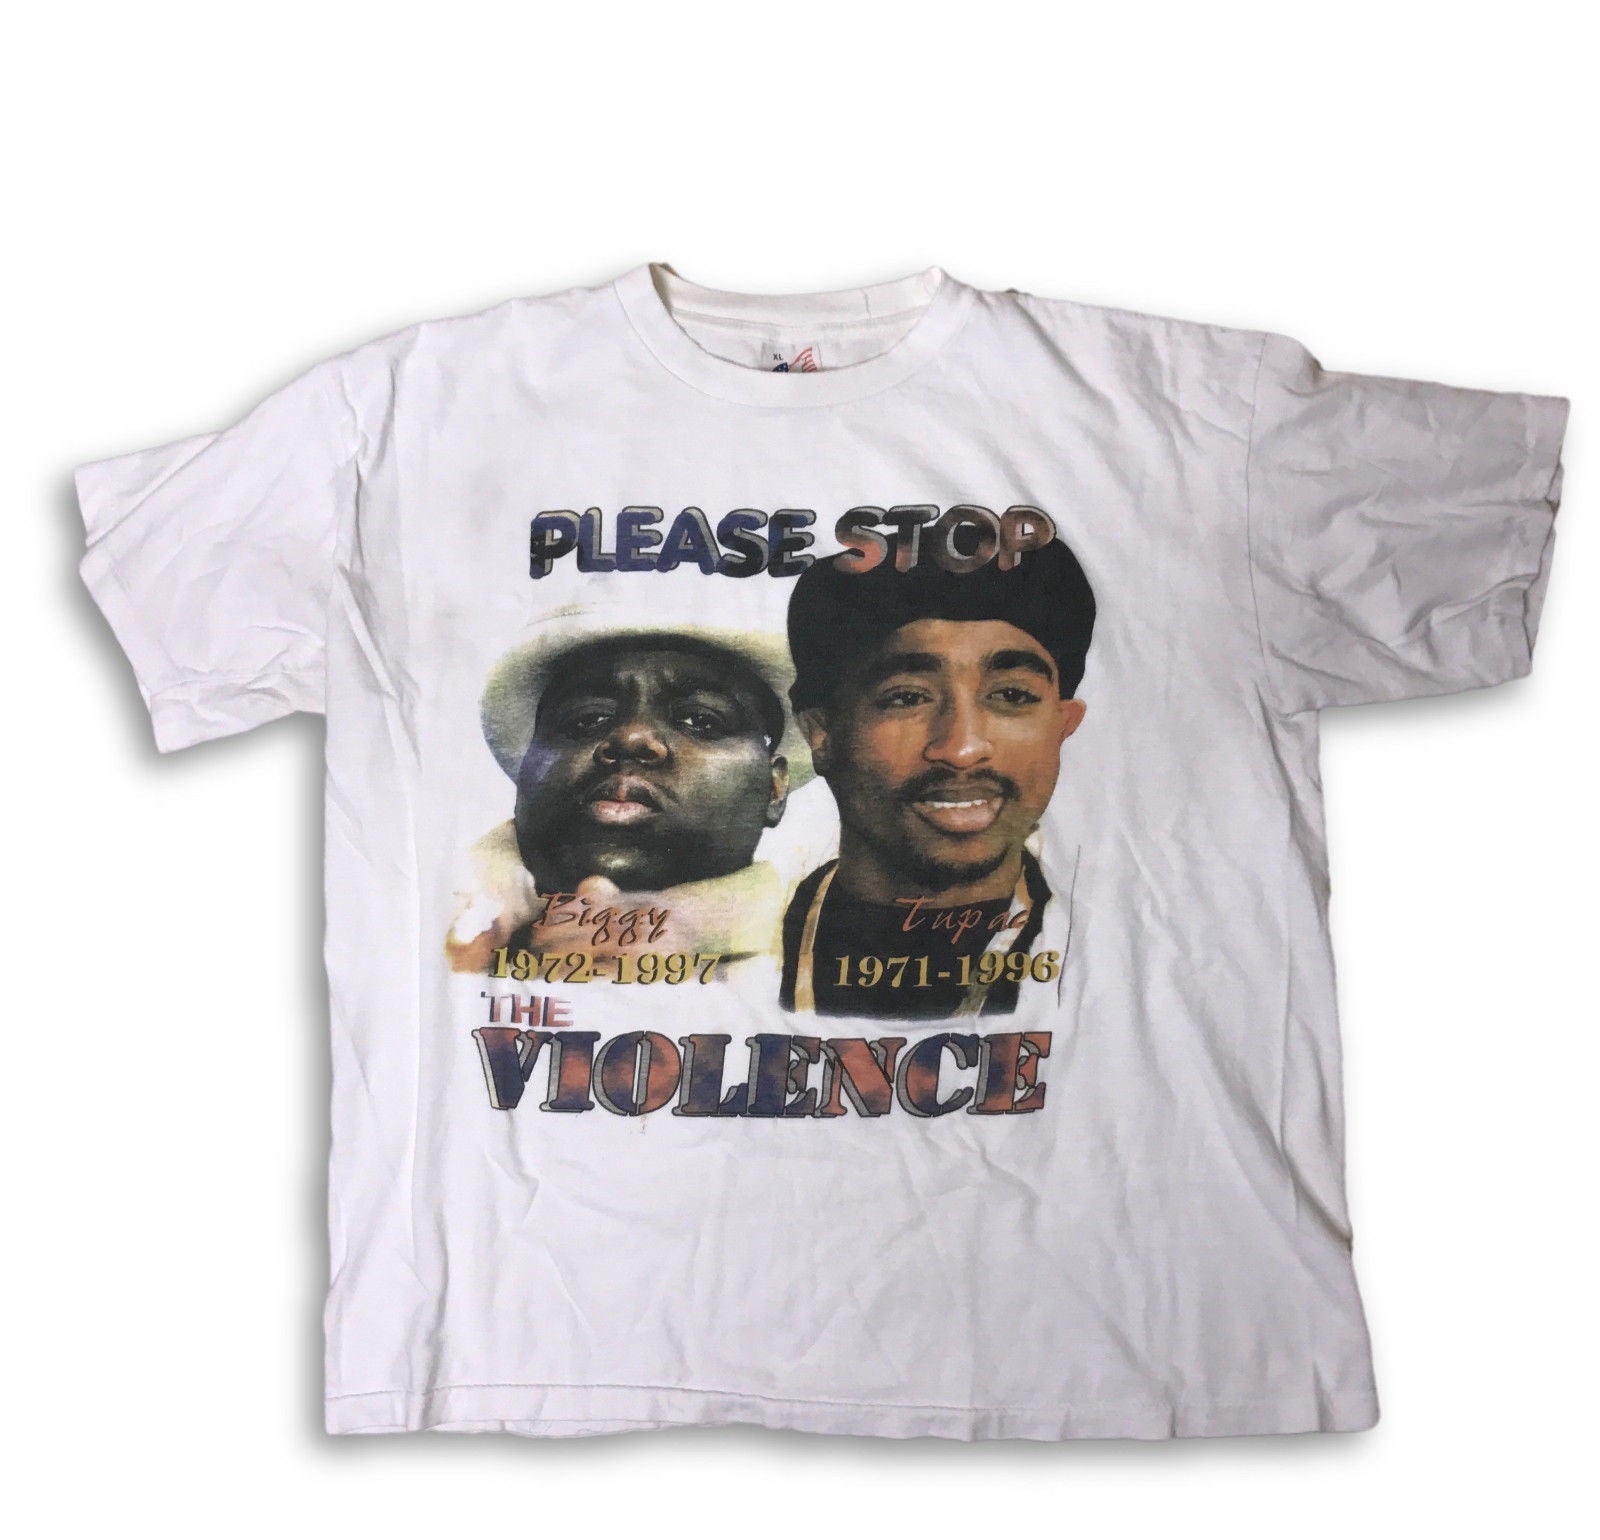 Tupac 2pac Biggie "Please Stop The Violence" Vintage Hip-Hop T-Shirt